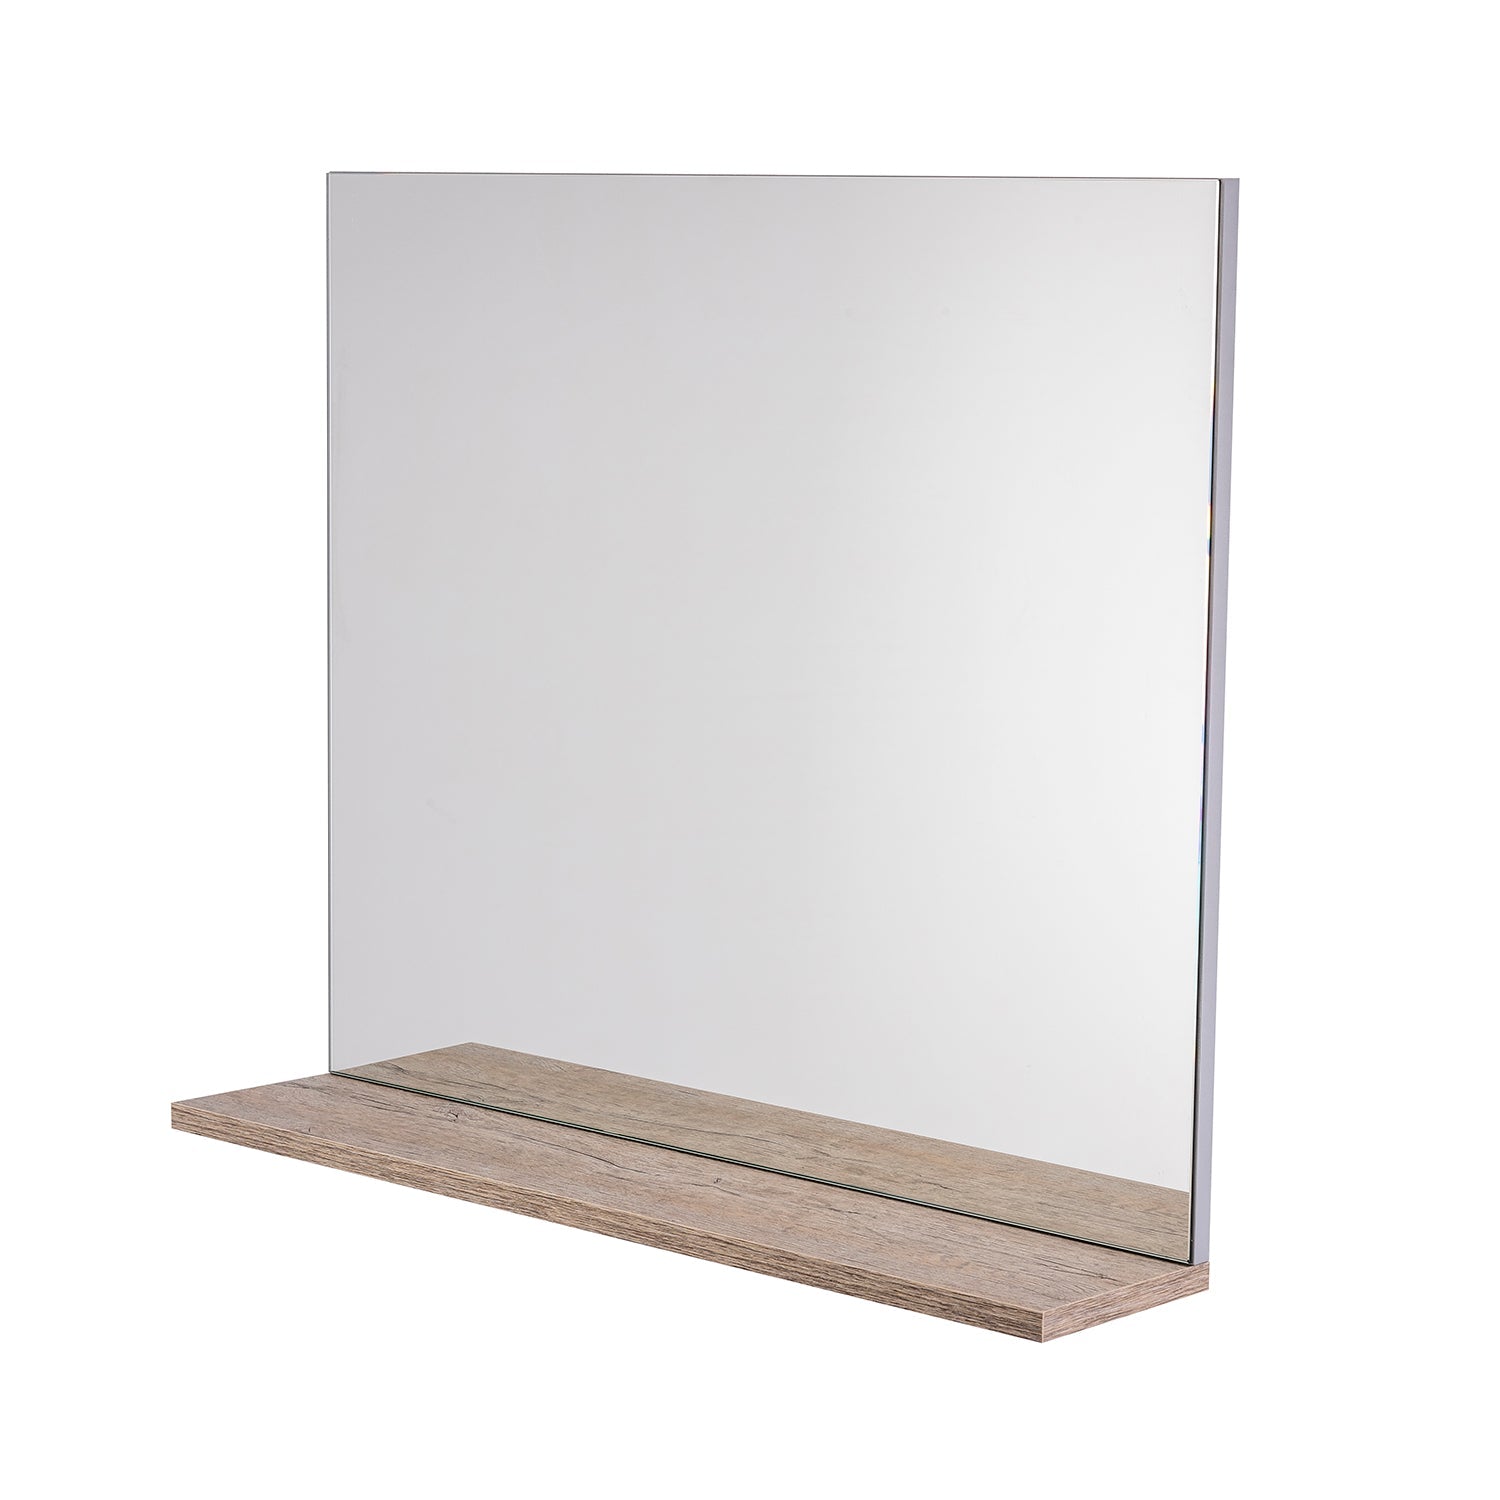 Wood Mirror Shelf, Wall Mount 'OHANA Collection by DAX